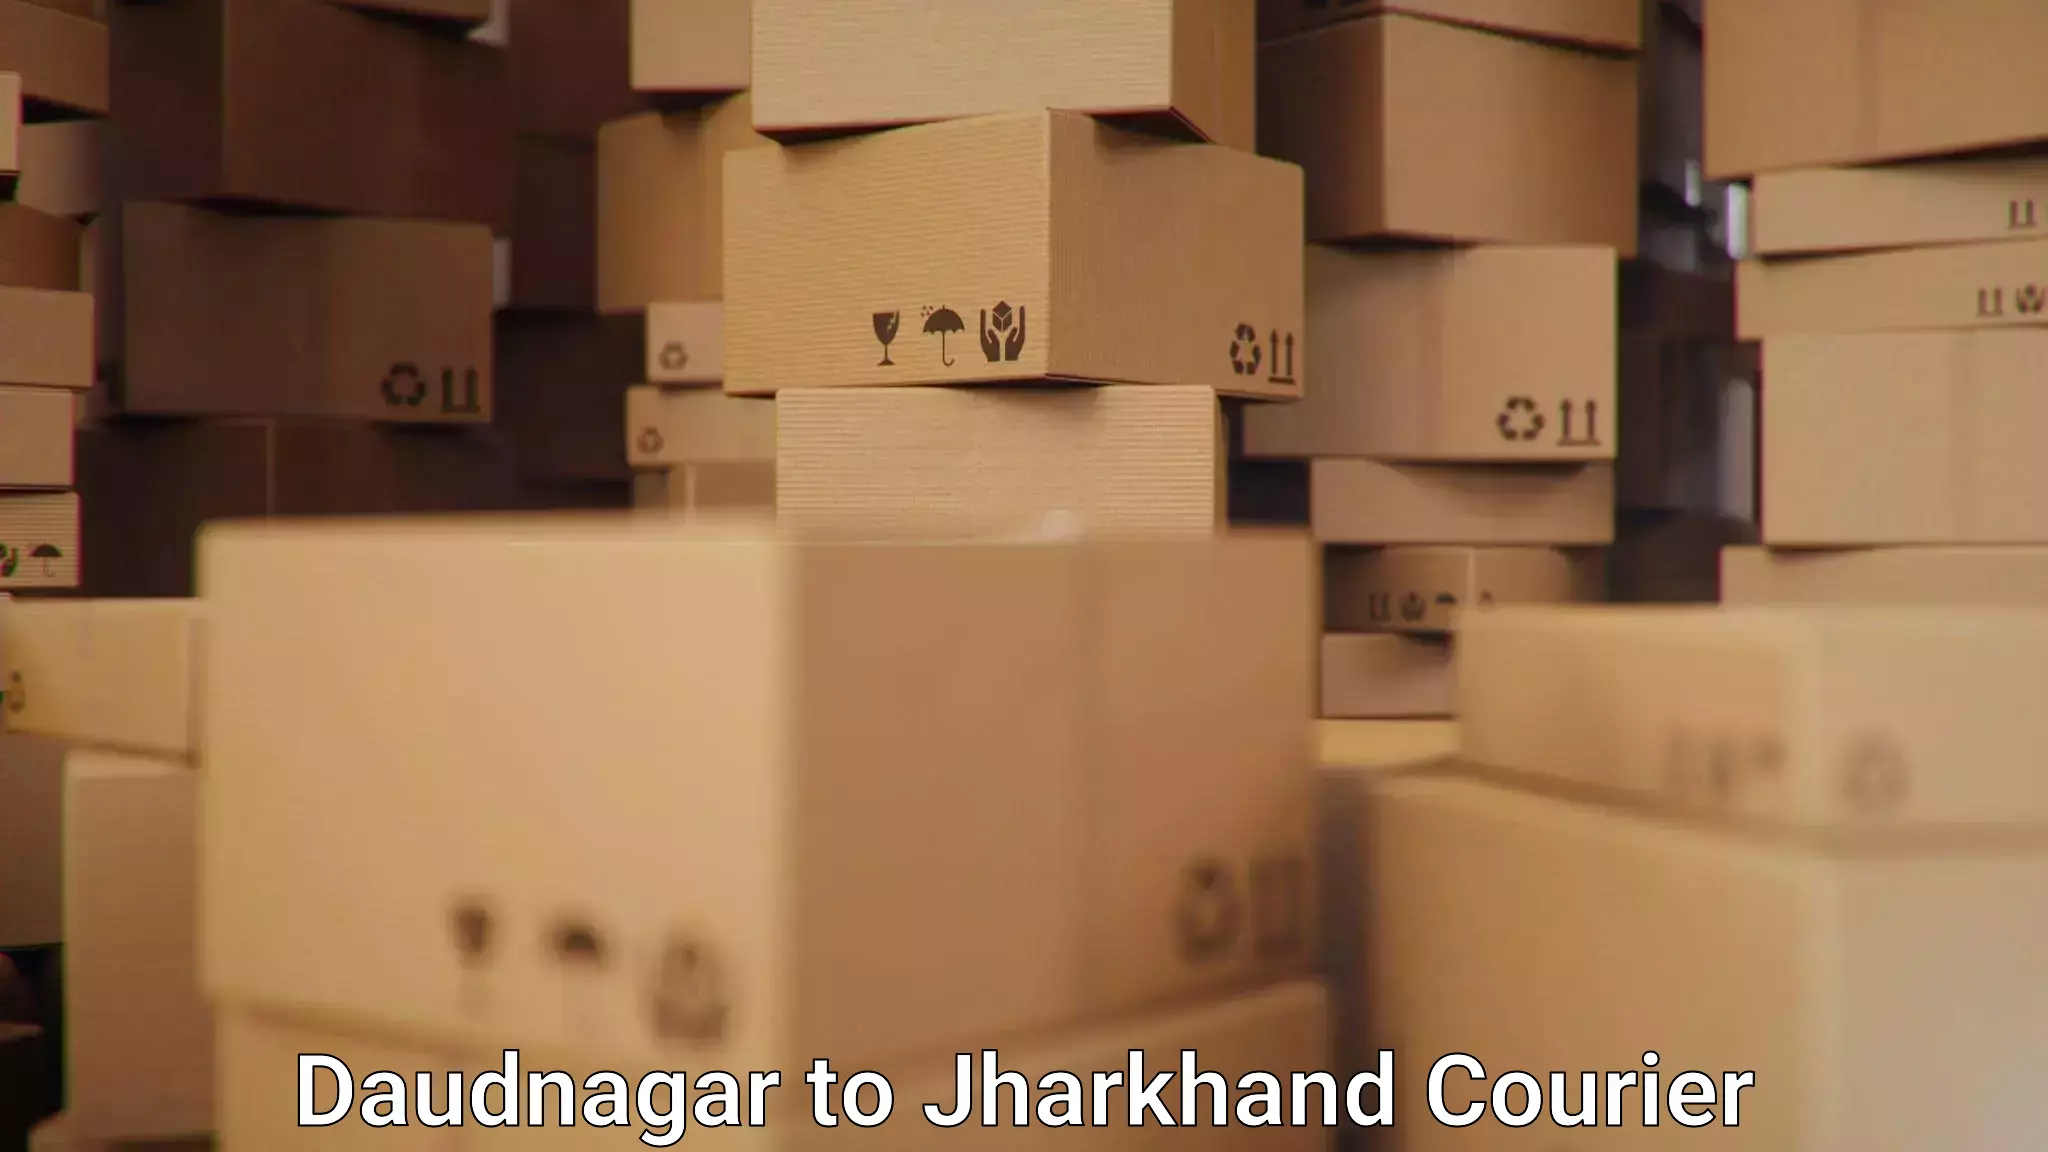 Global courier networks Daudnagar to Jamshedpur